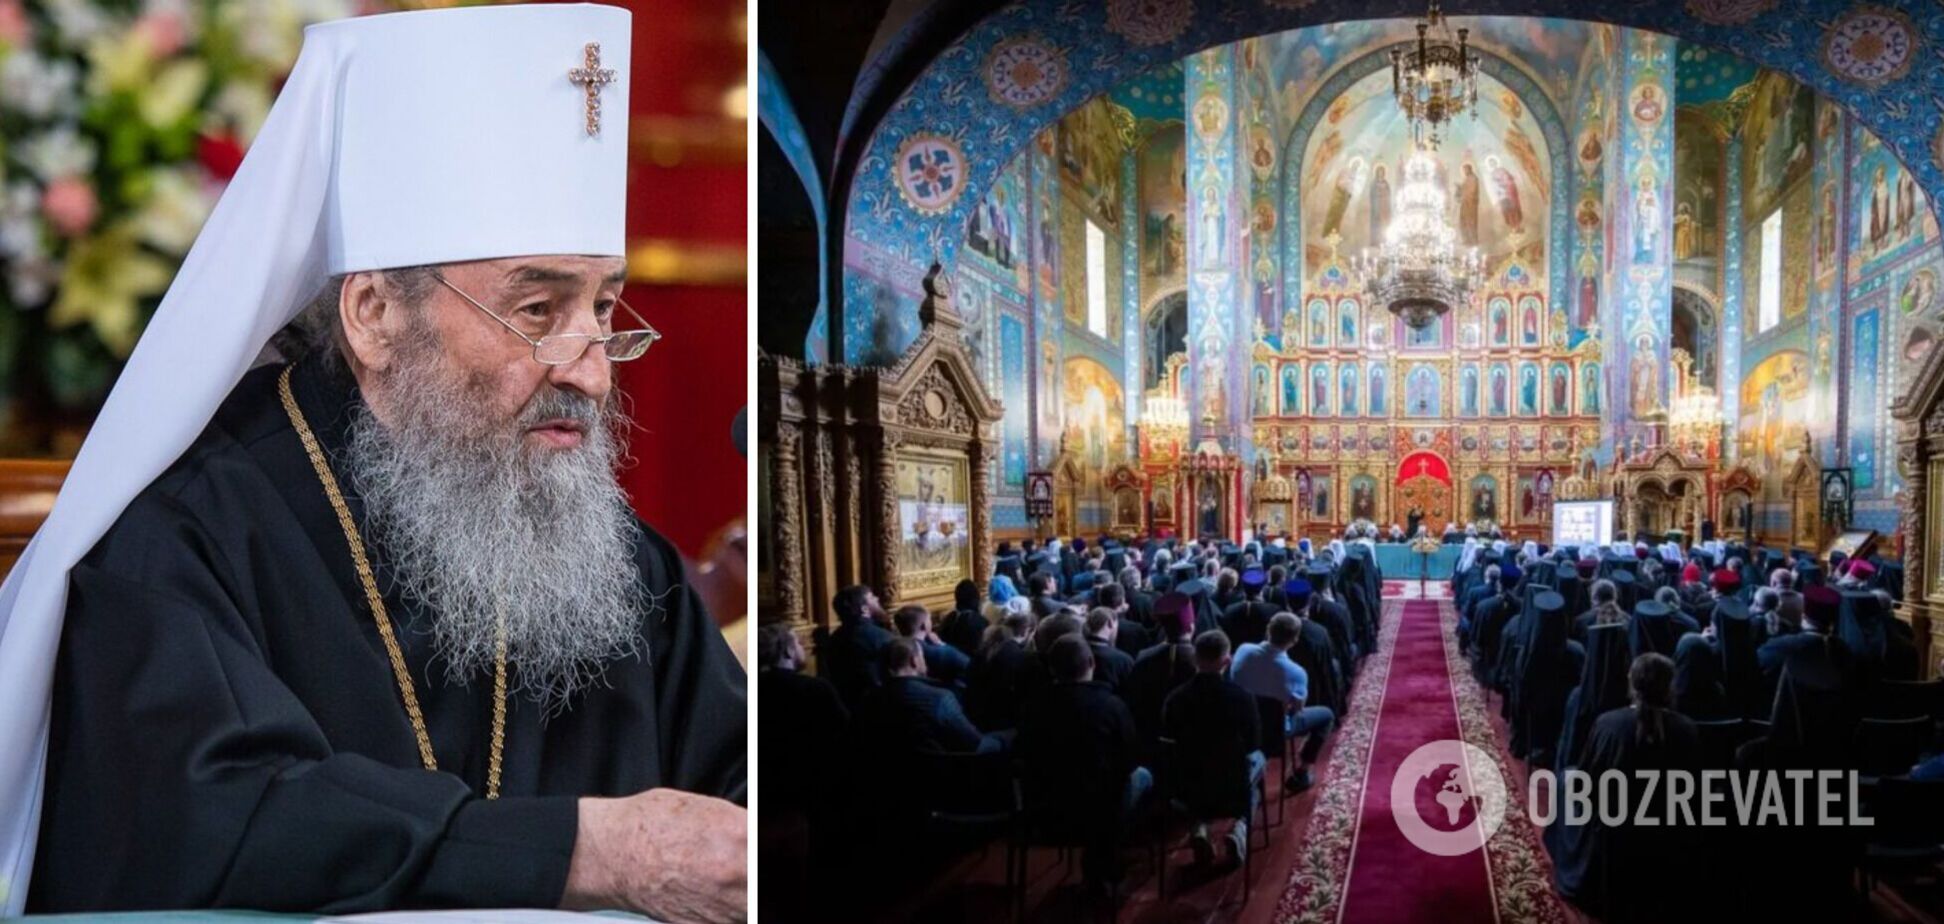 УПЦ МП выступила против патриарха Кирилла, но не порвала все связи с РПЦ